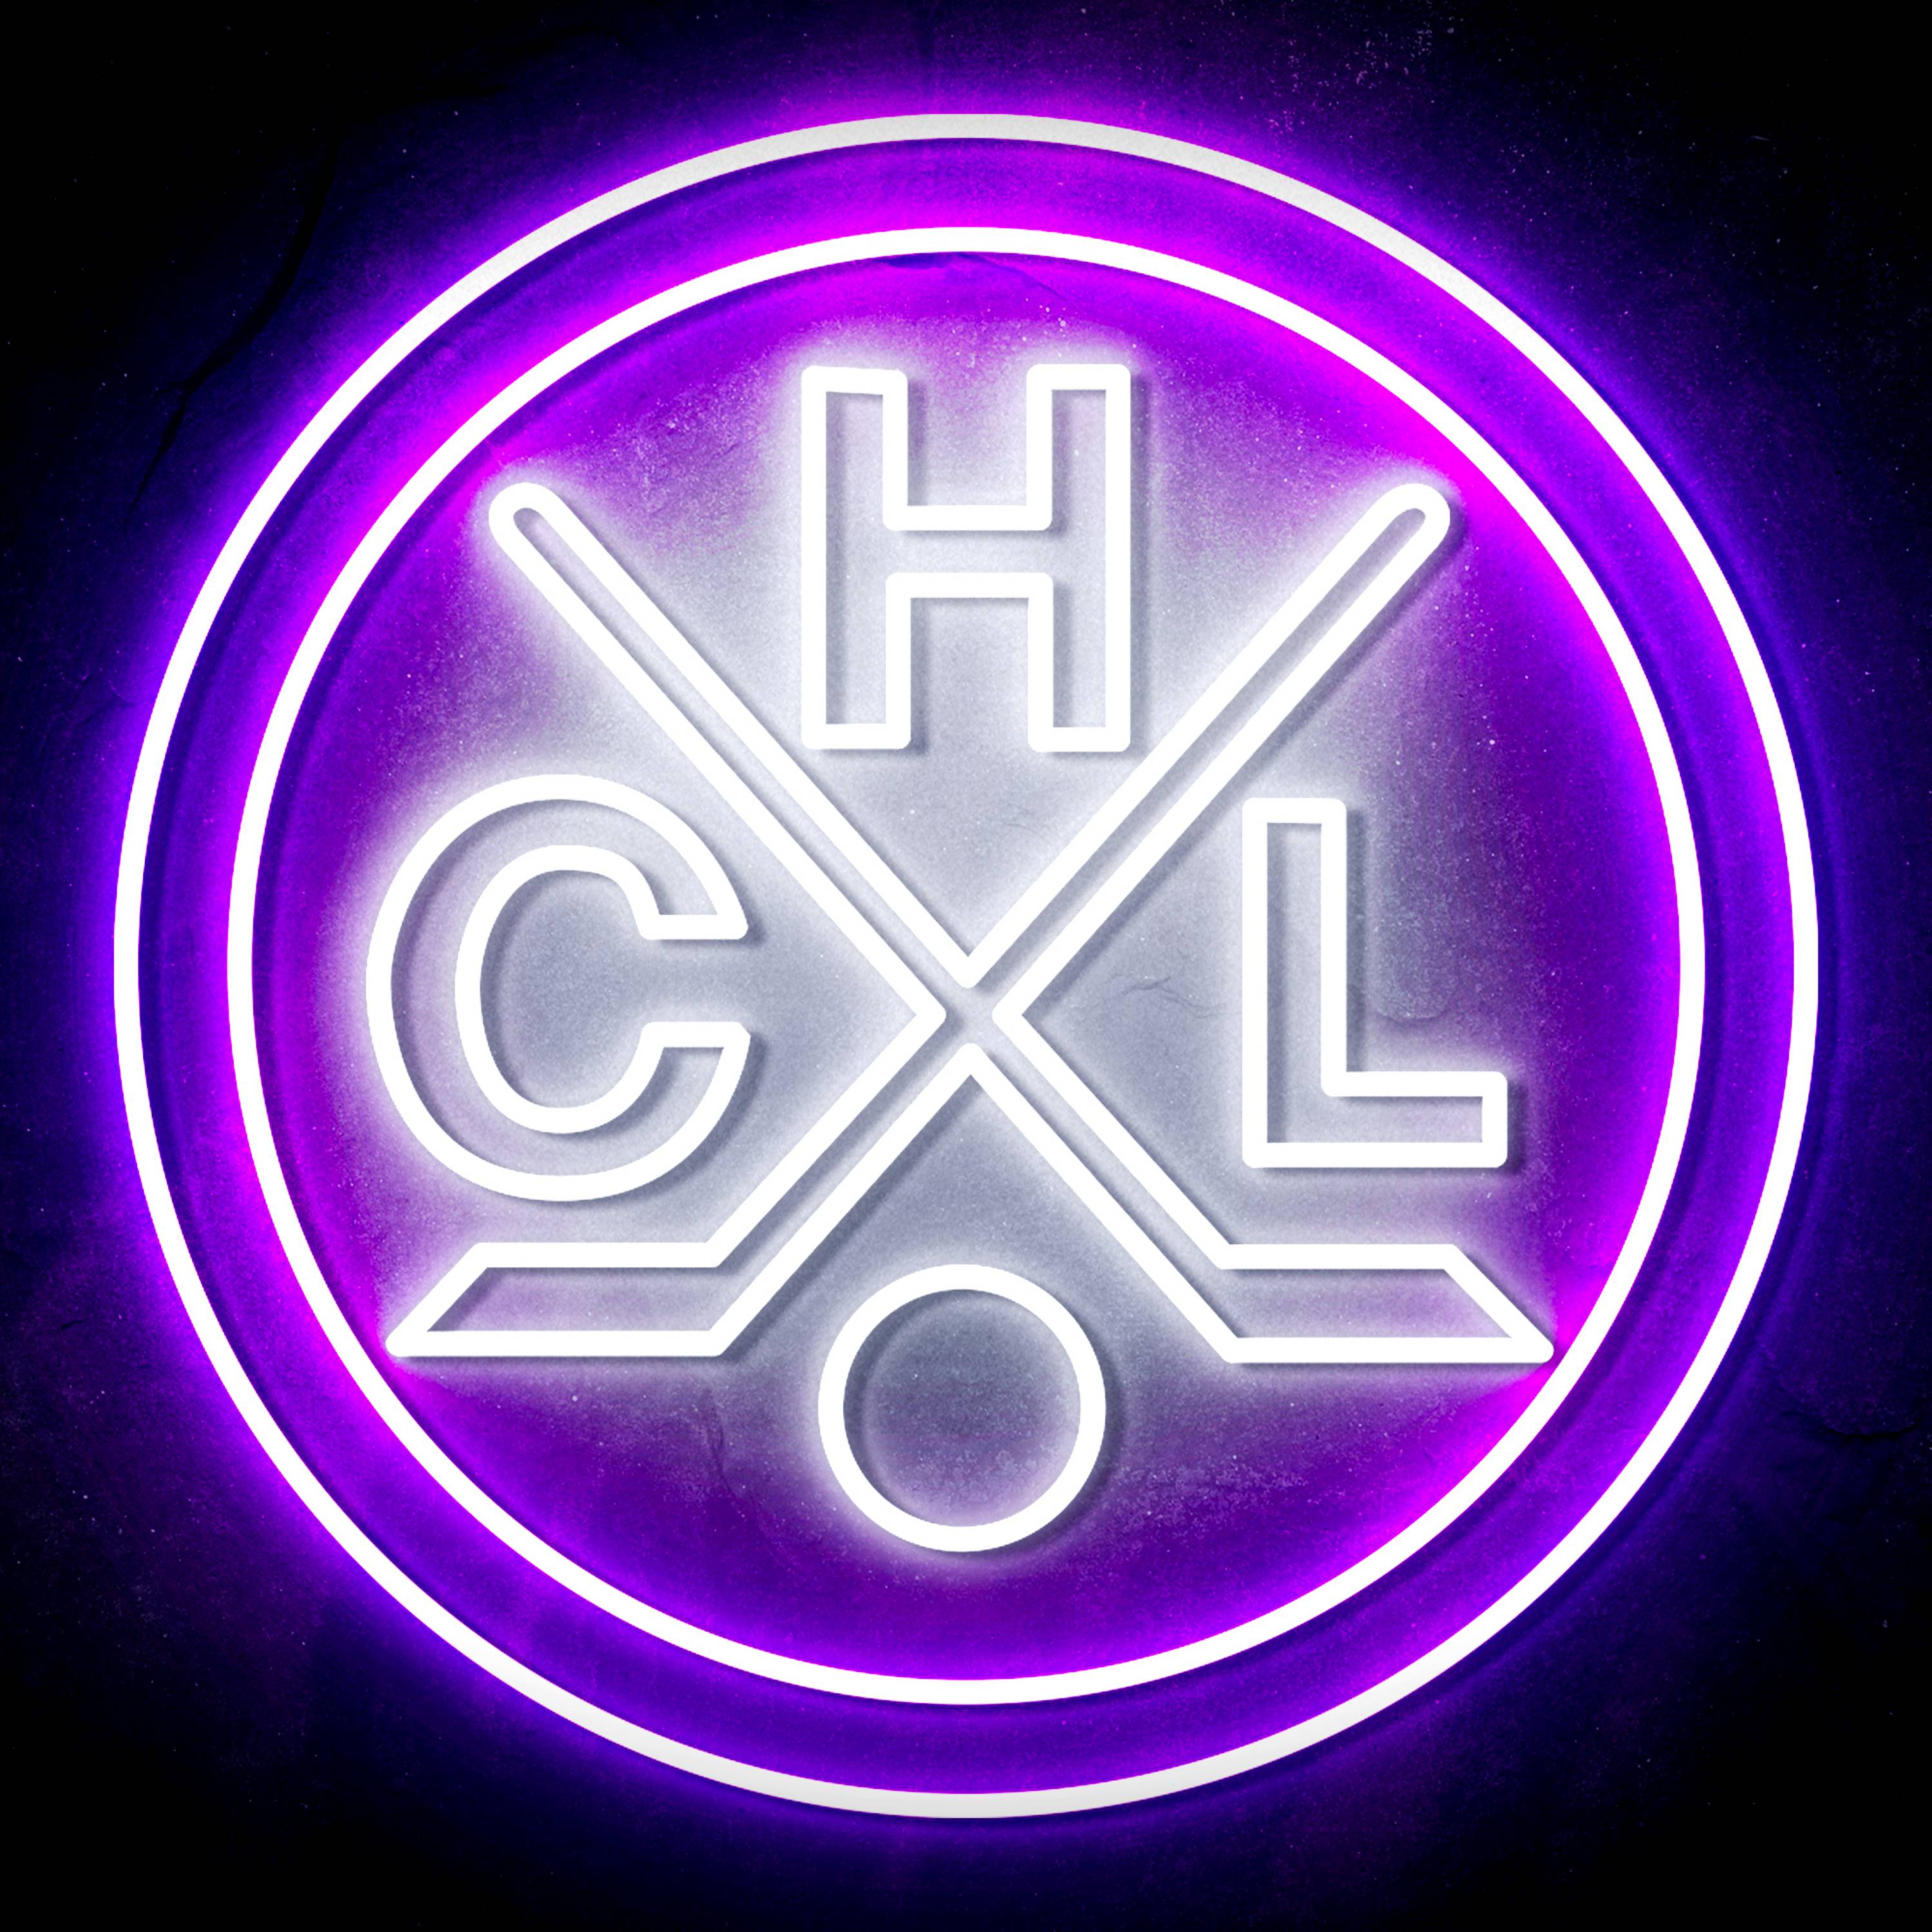 CHL HC Lugano LED Neon Sign